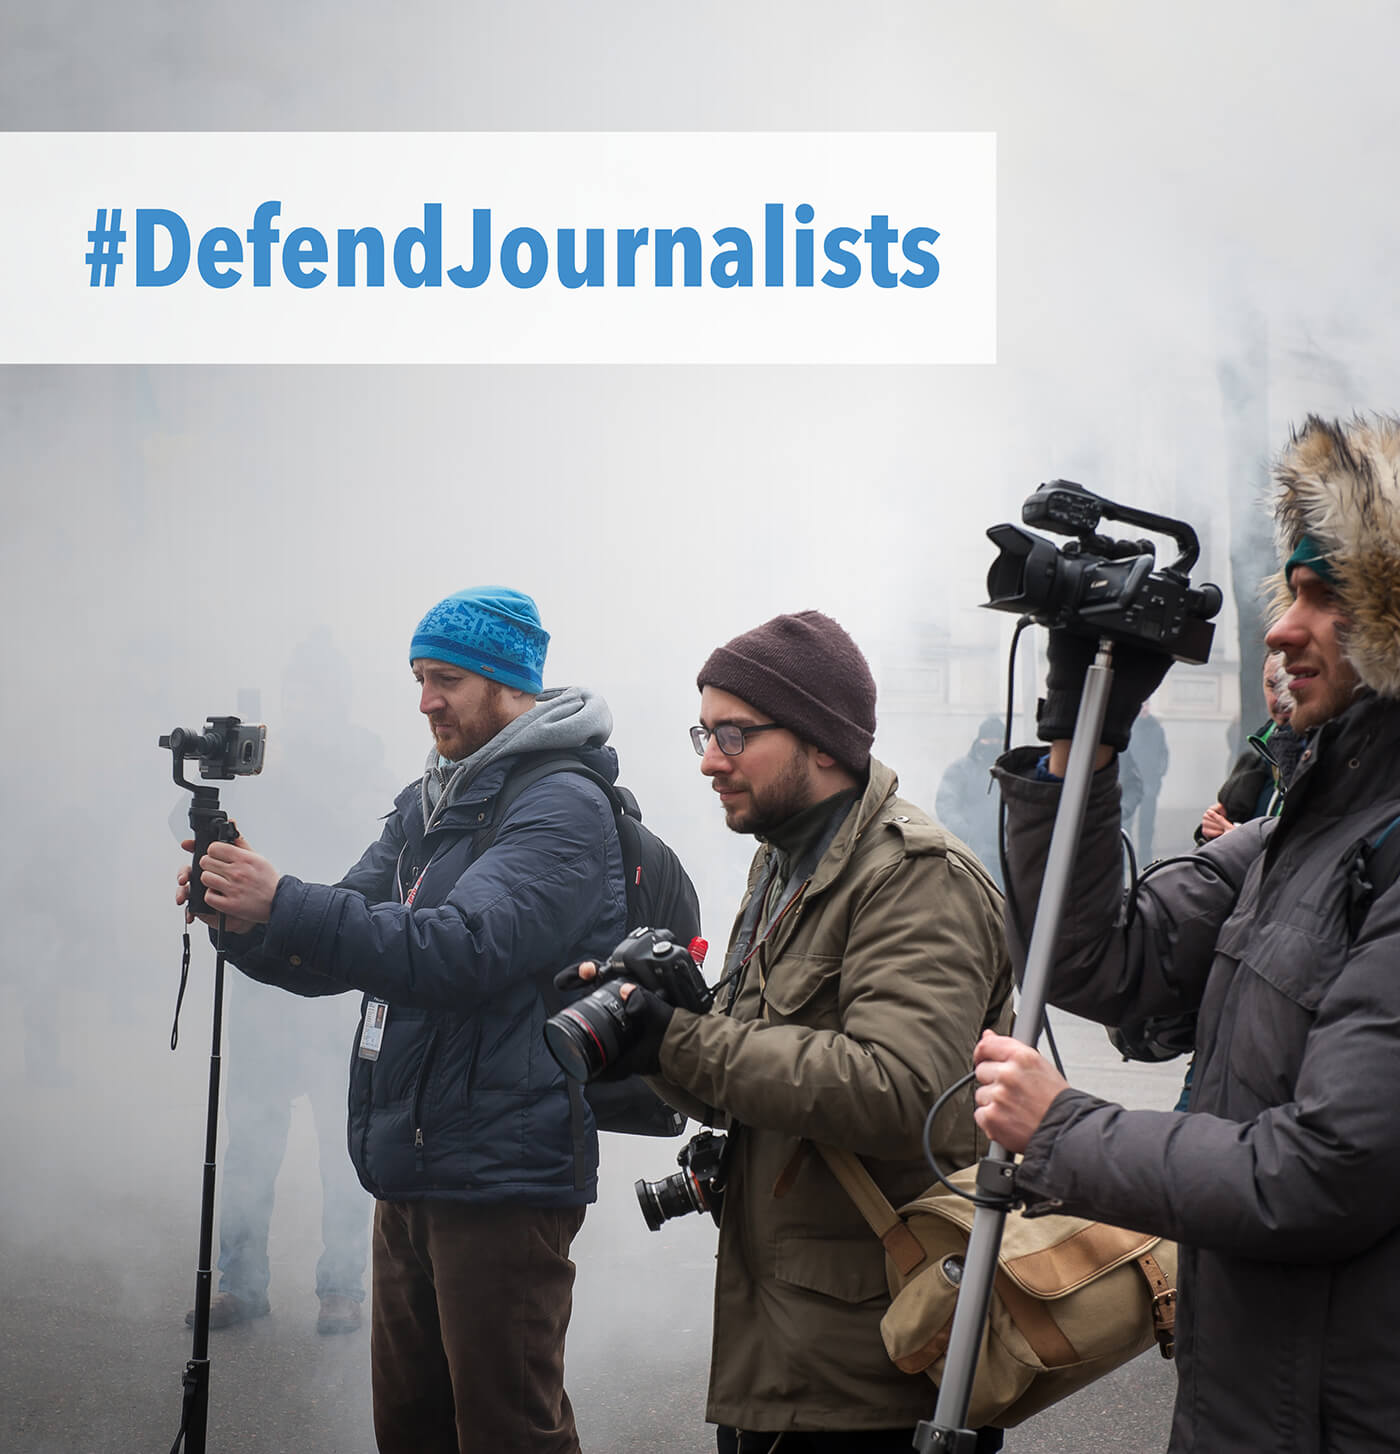 #DefendJournalists